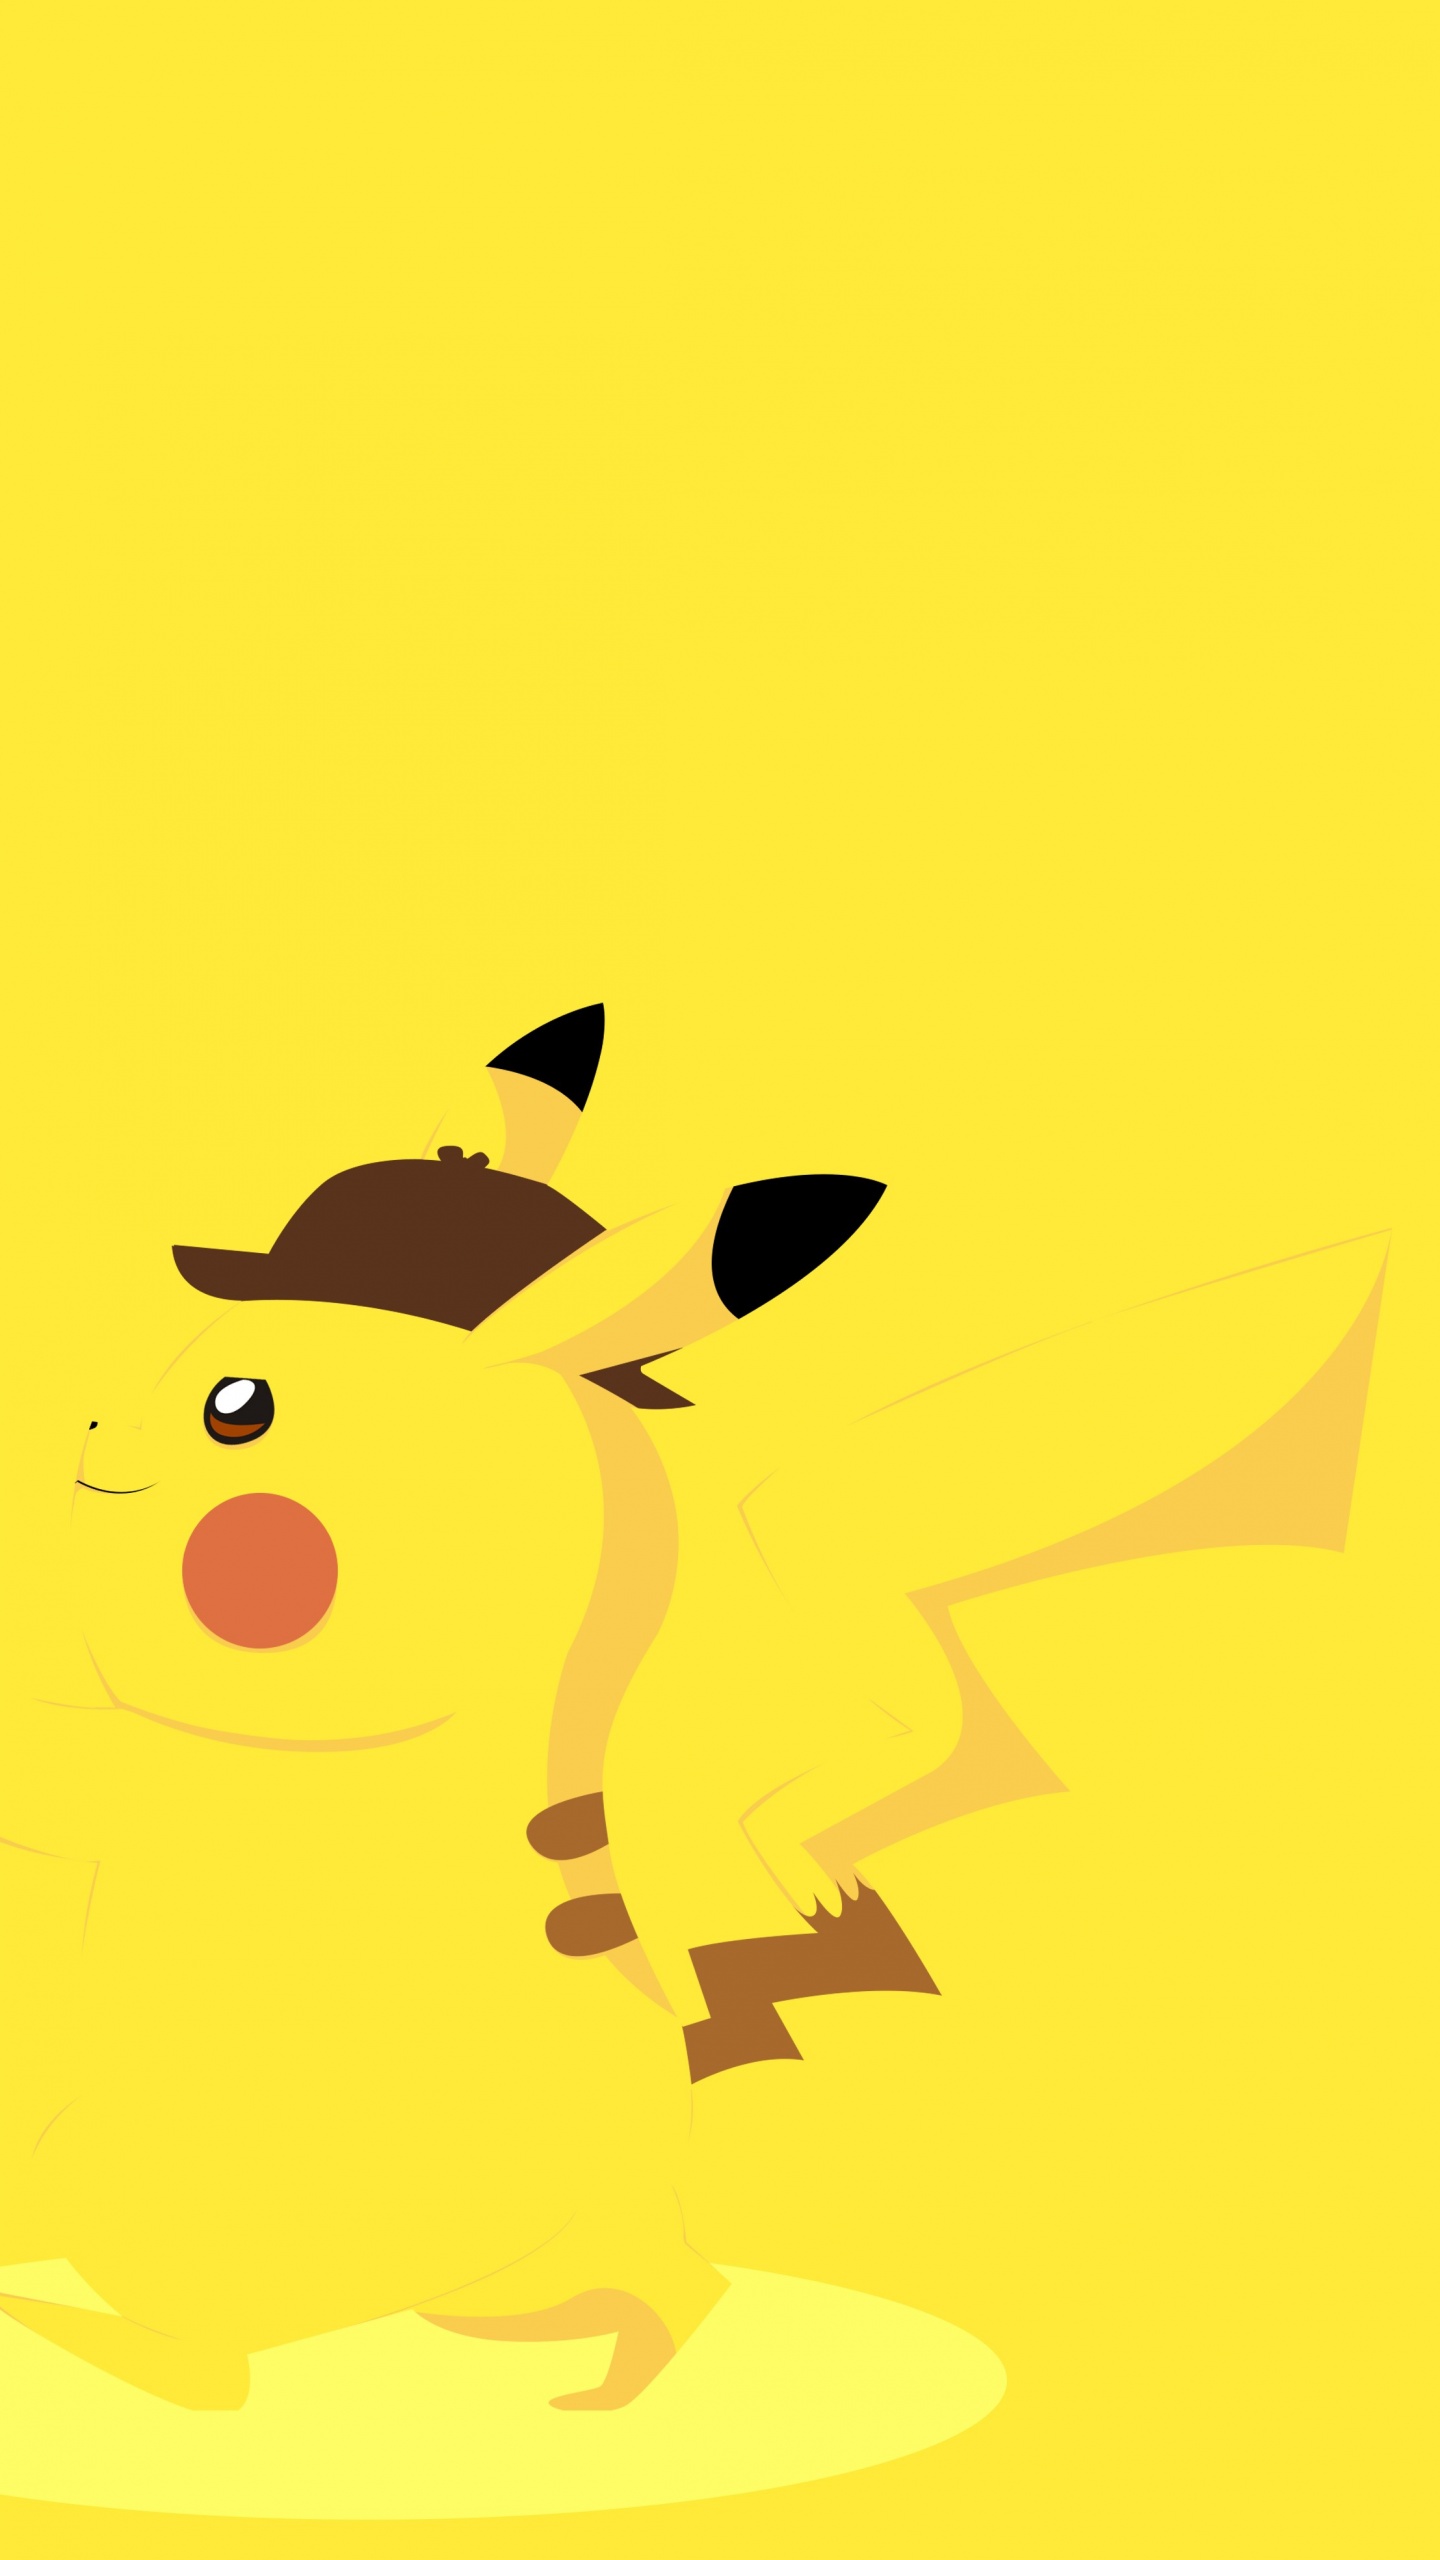 Pikachu Wallpaper 4K, Yellow background, Minimal art